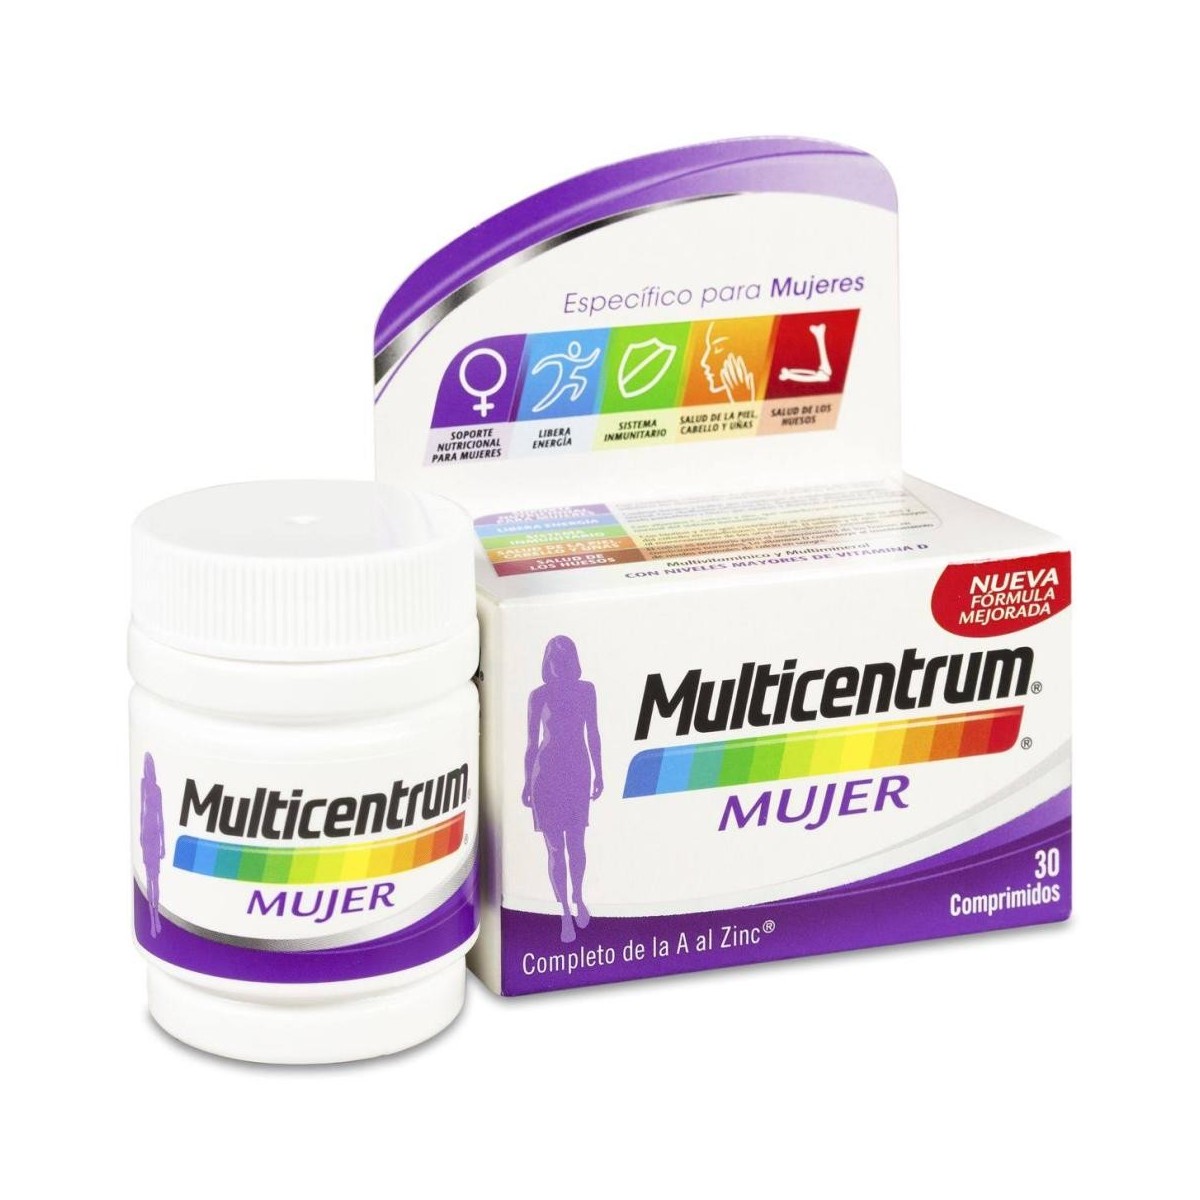 multicentrum-mujer-30-comprimidos